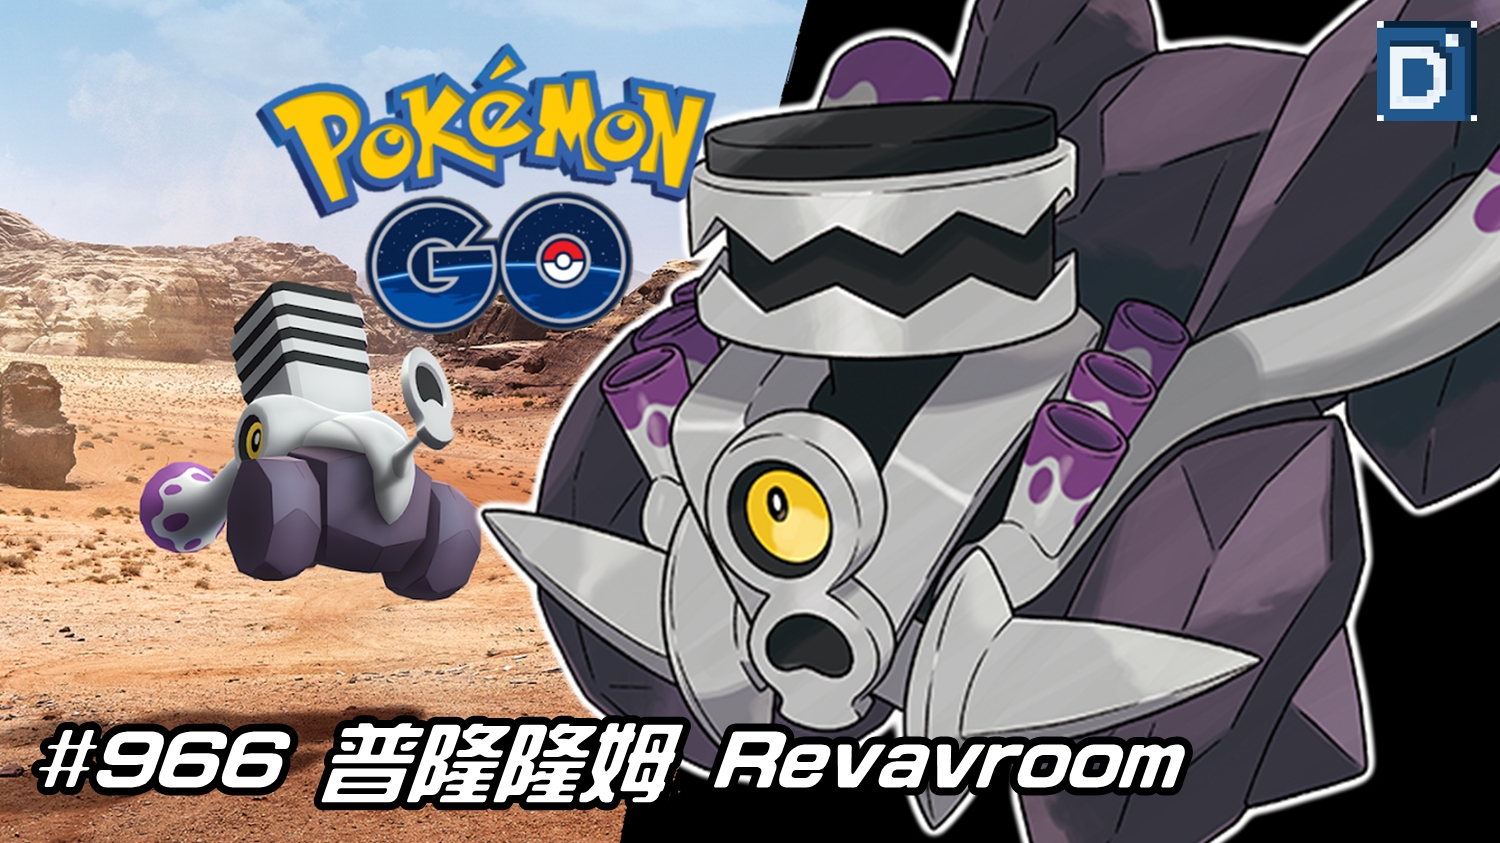 PokemonGo-Revavroom